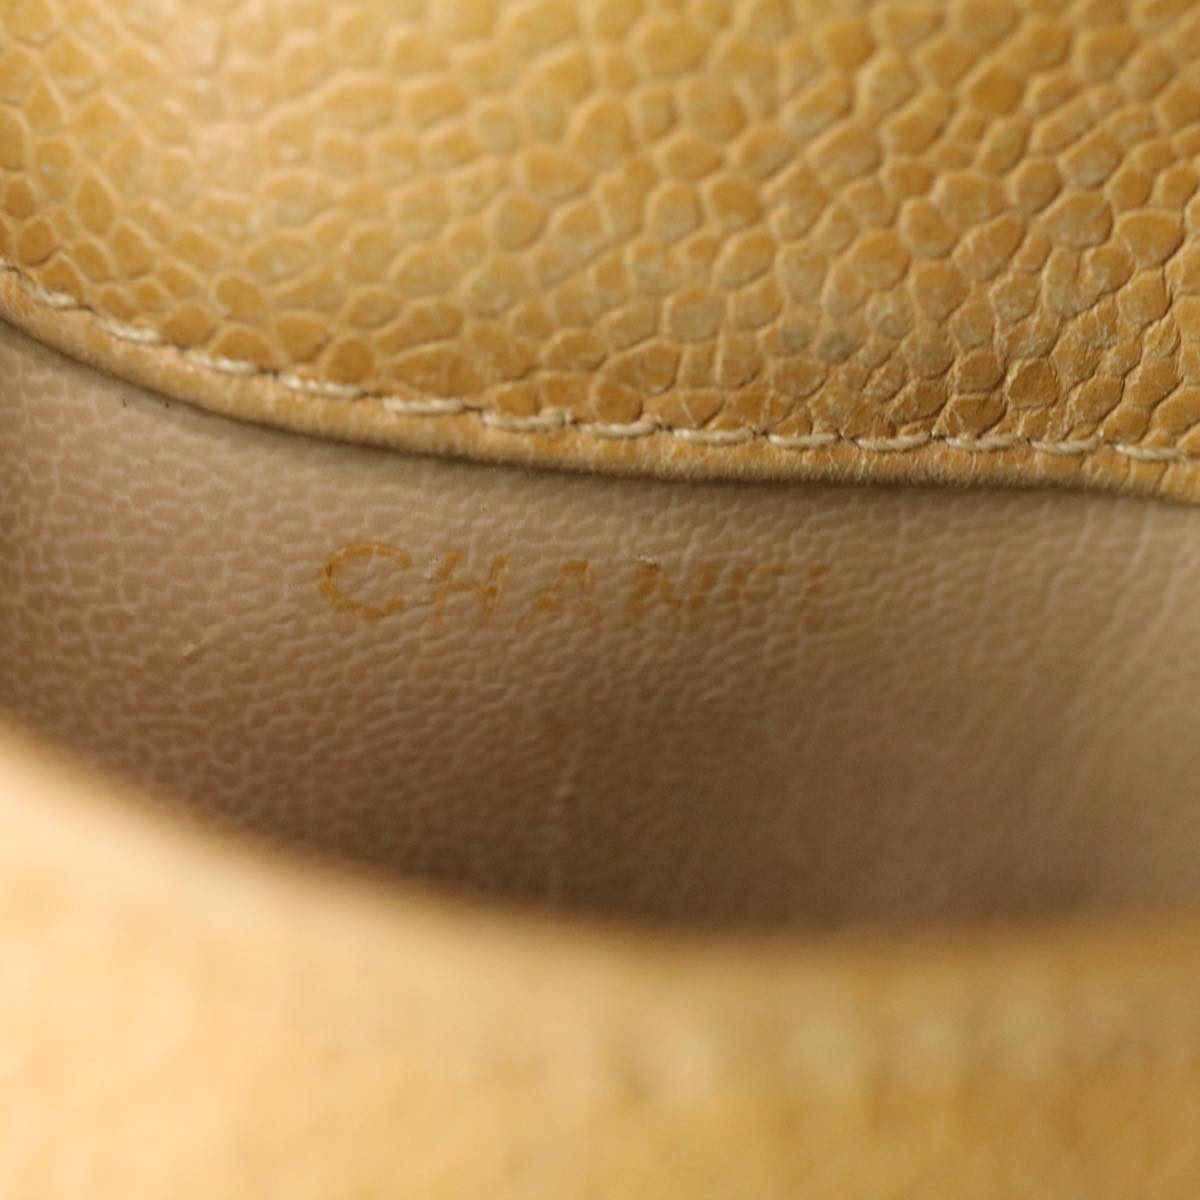 CHANEL Turn Lock Chain pochette Shoulder Bag Caviar Skin Beige CC Auth bs3784